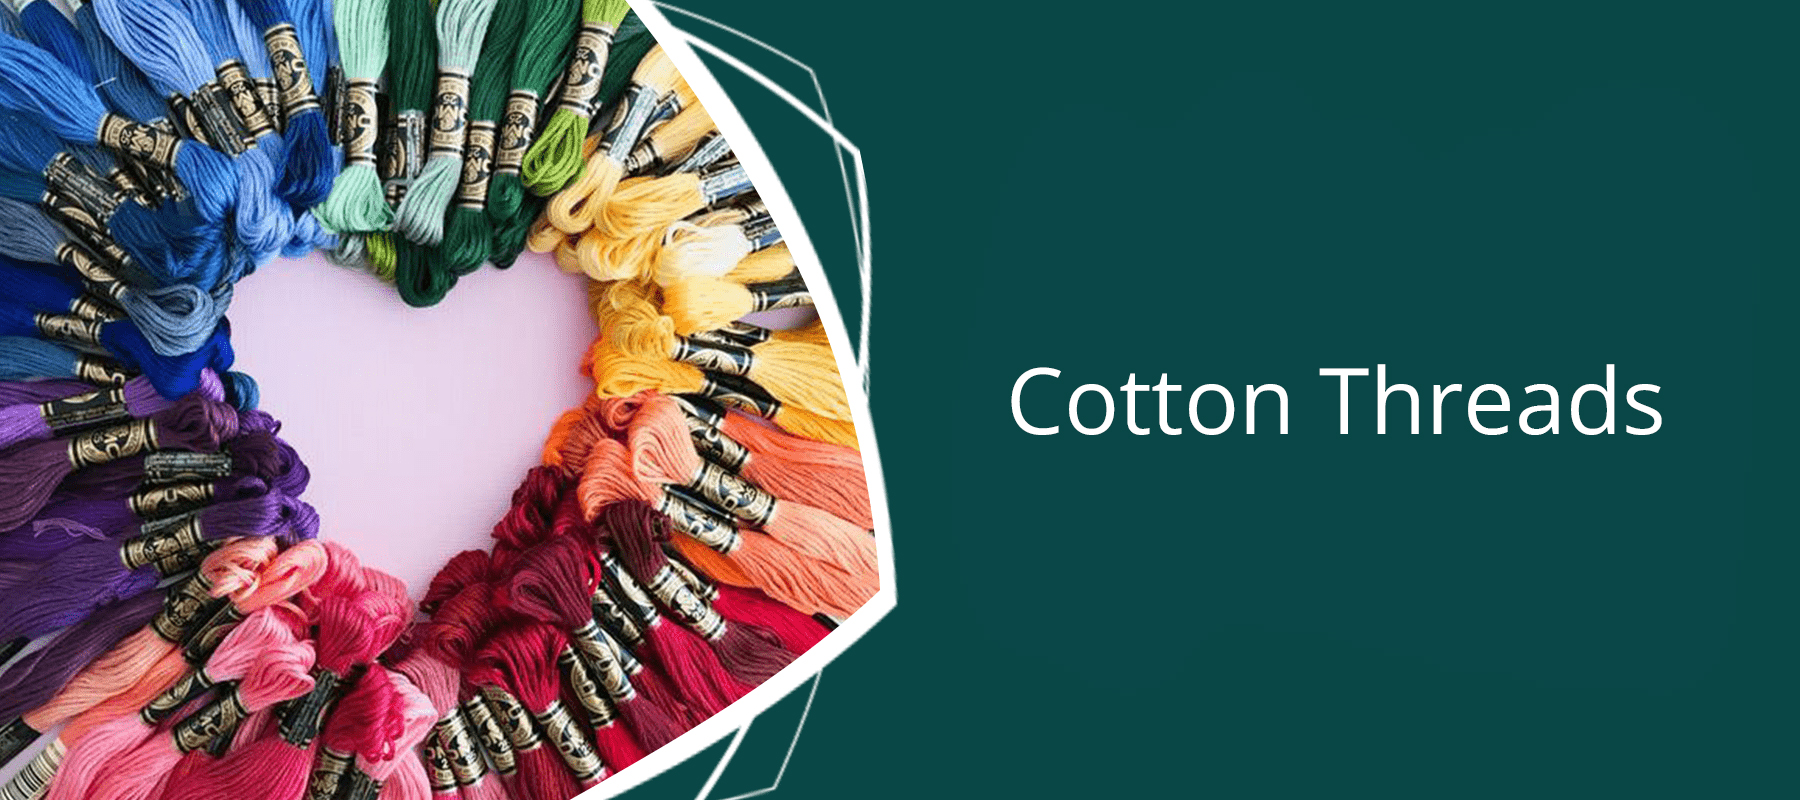 Cotton Thread for Embroidery Australia: Needlecraft Made Easy